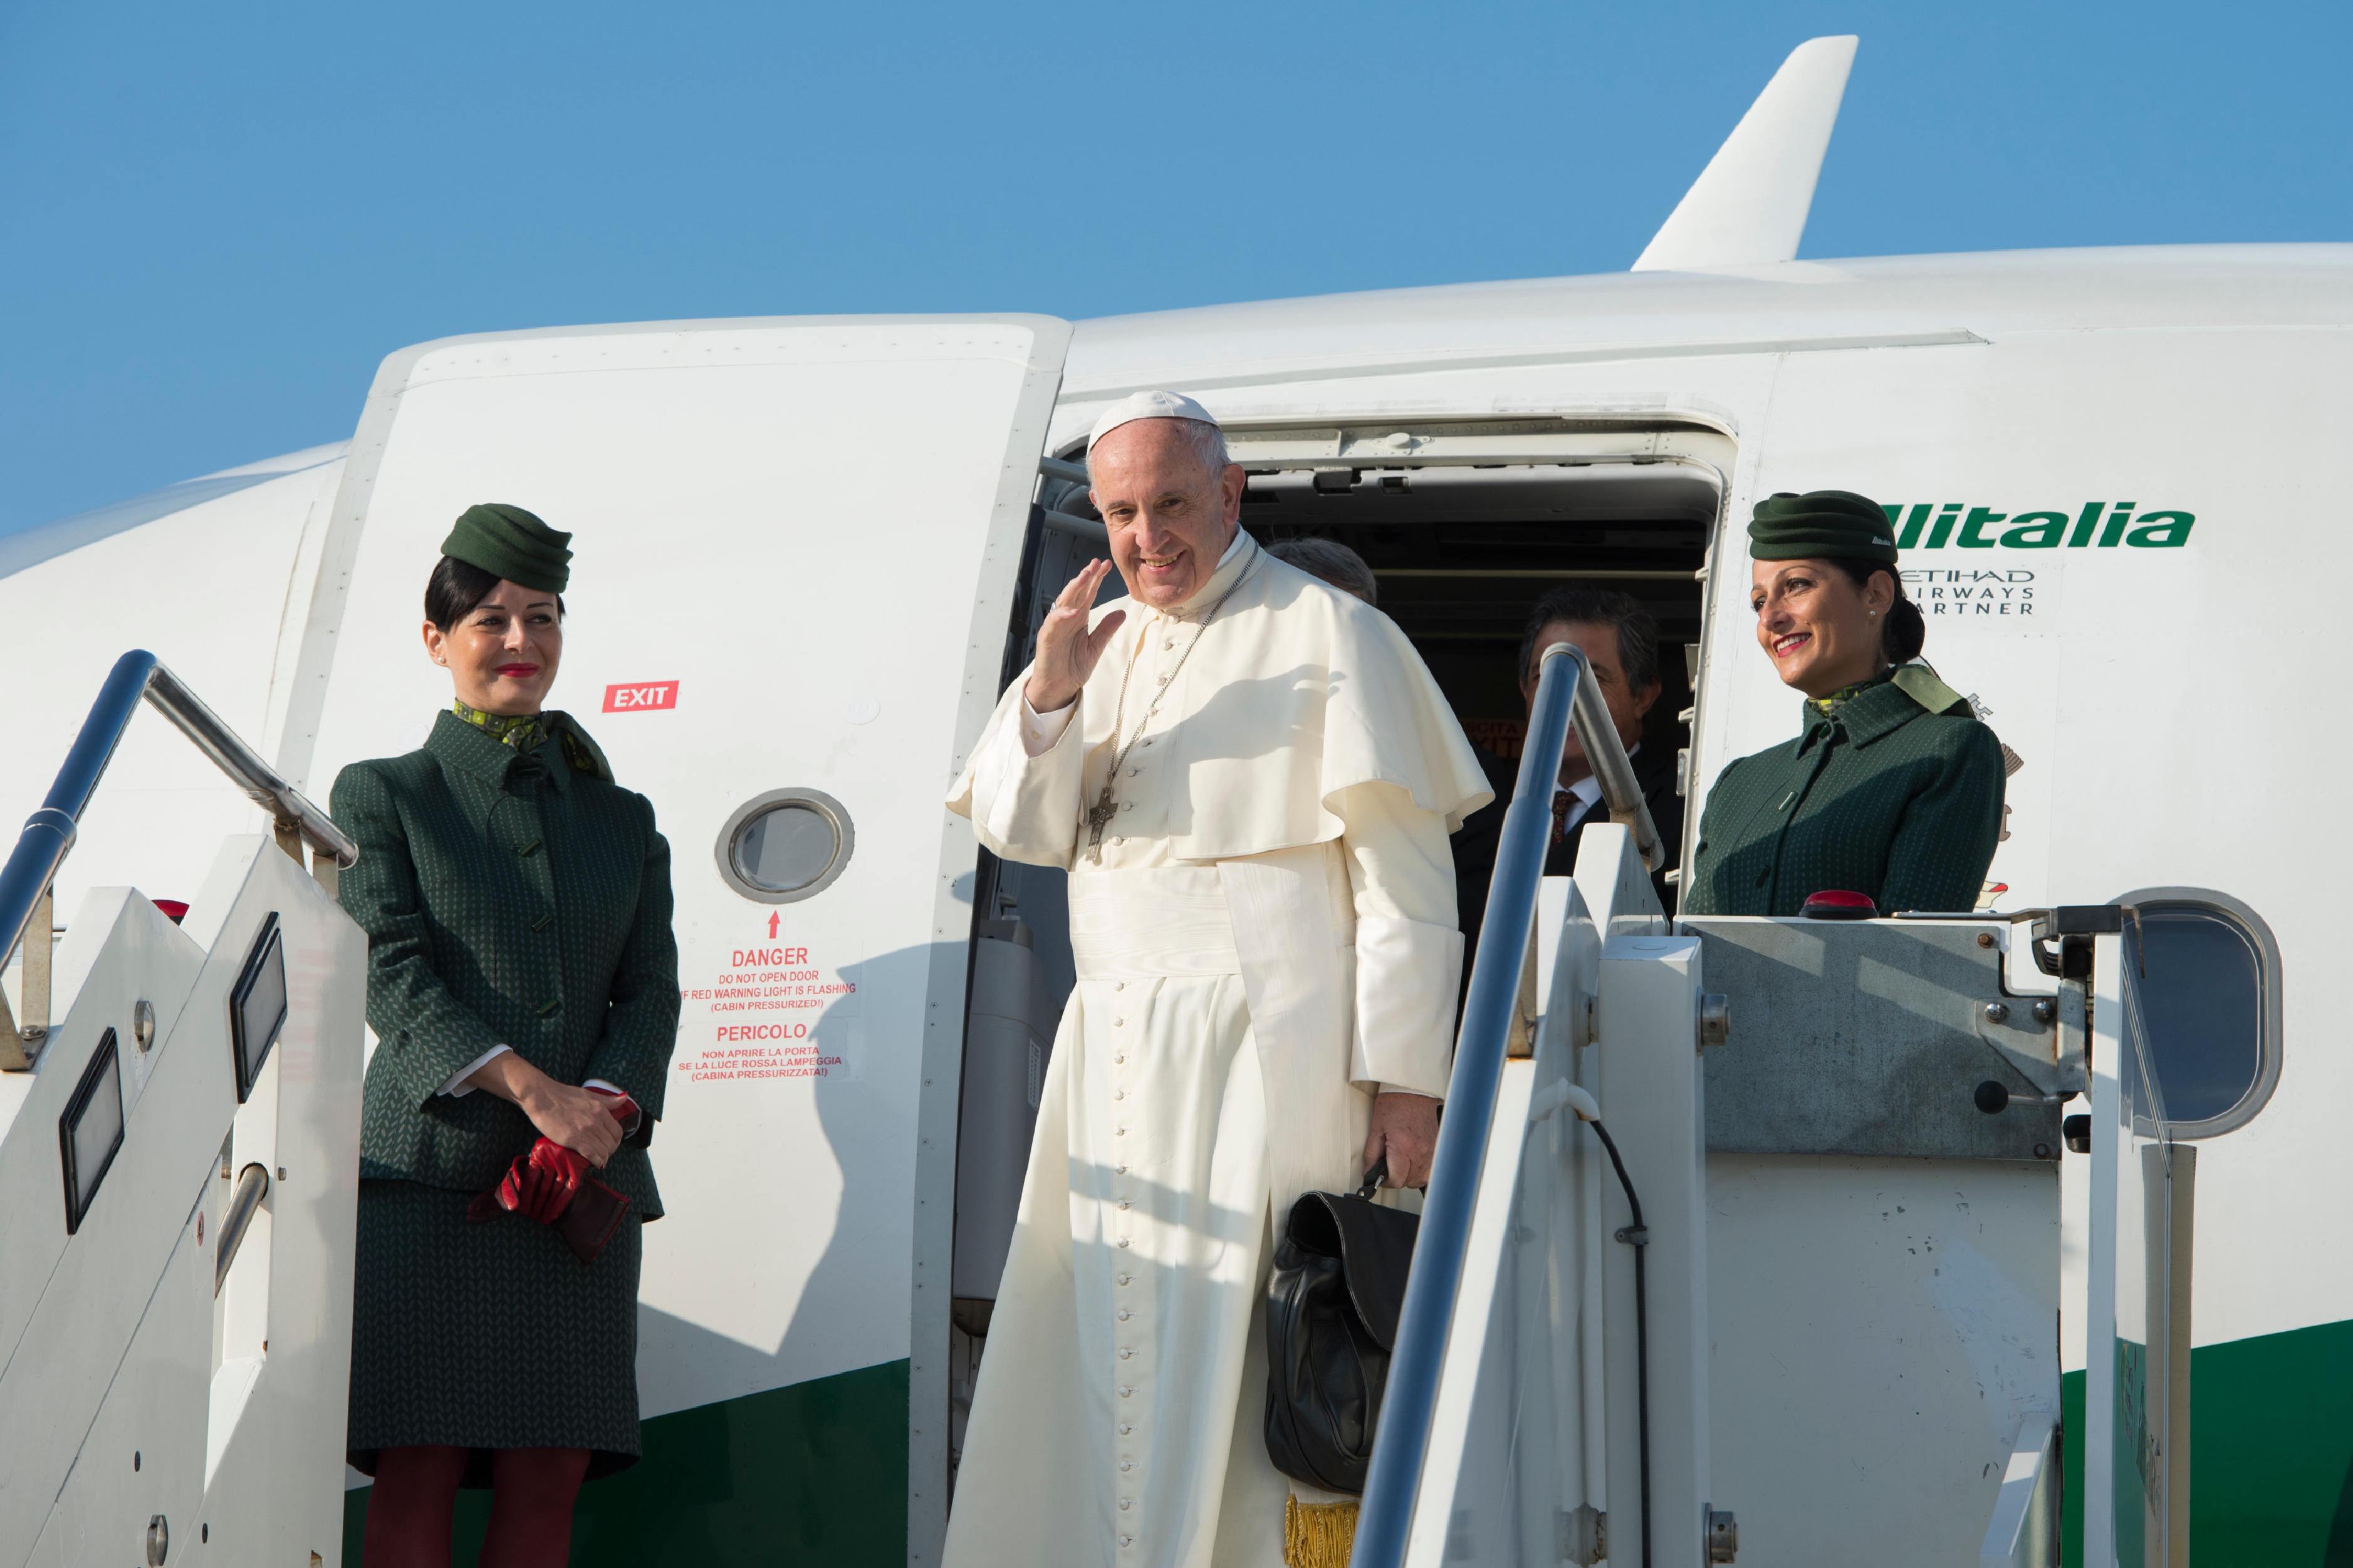 Le pape embarque à bord d'un avion d'Alitalia © L'Osservatore Romano